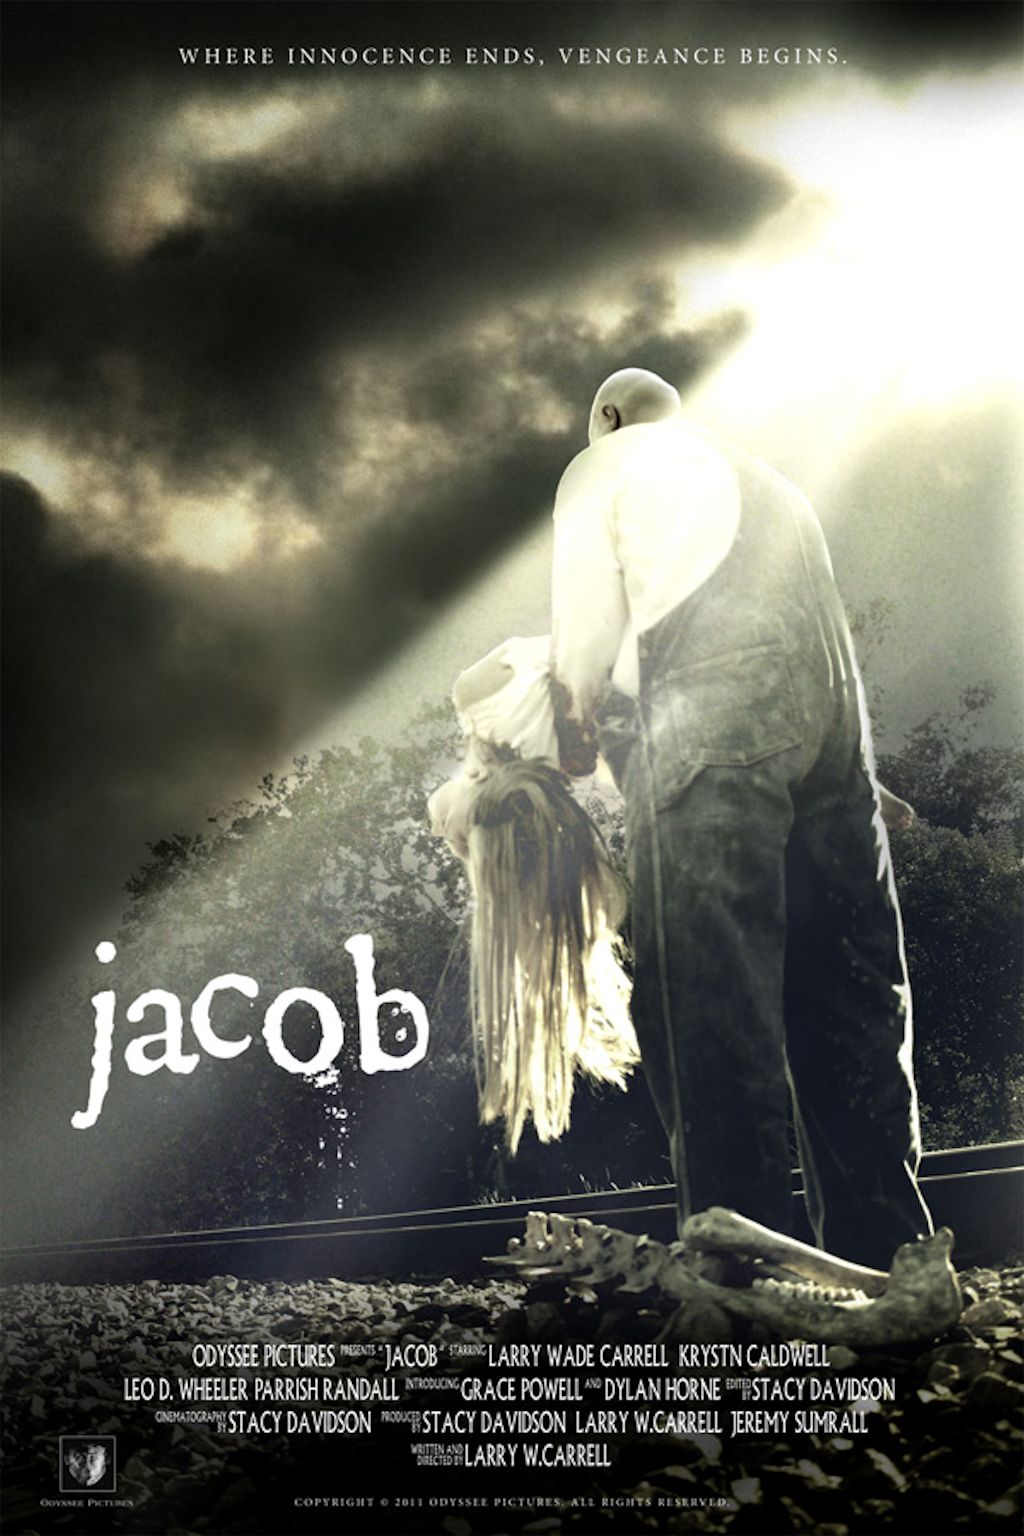 Jacob - Movie Promo Poster
Keywords: ;media_poster